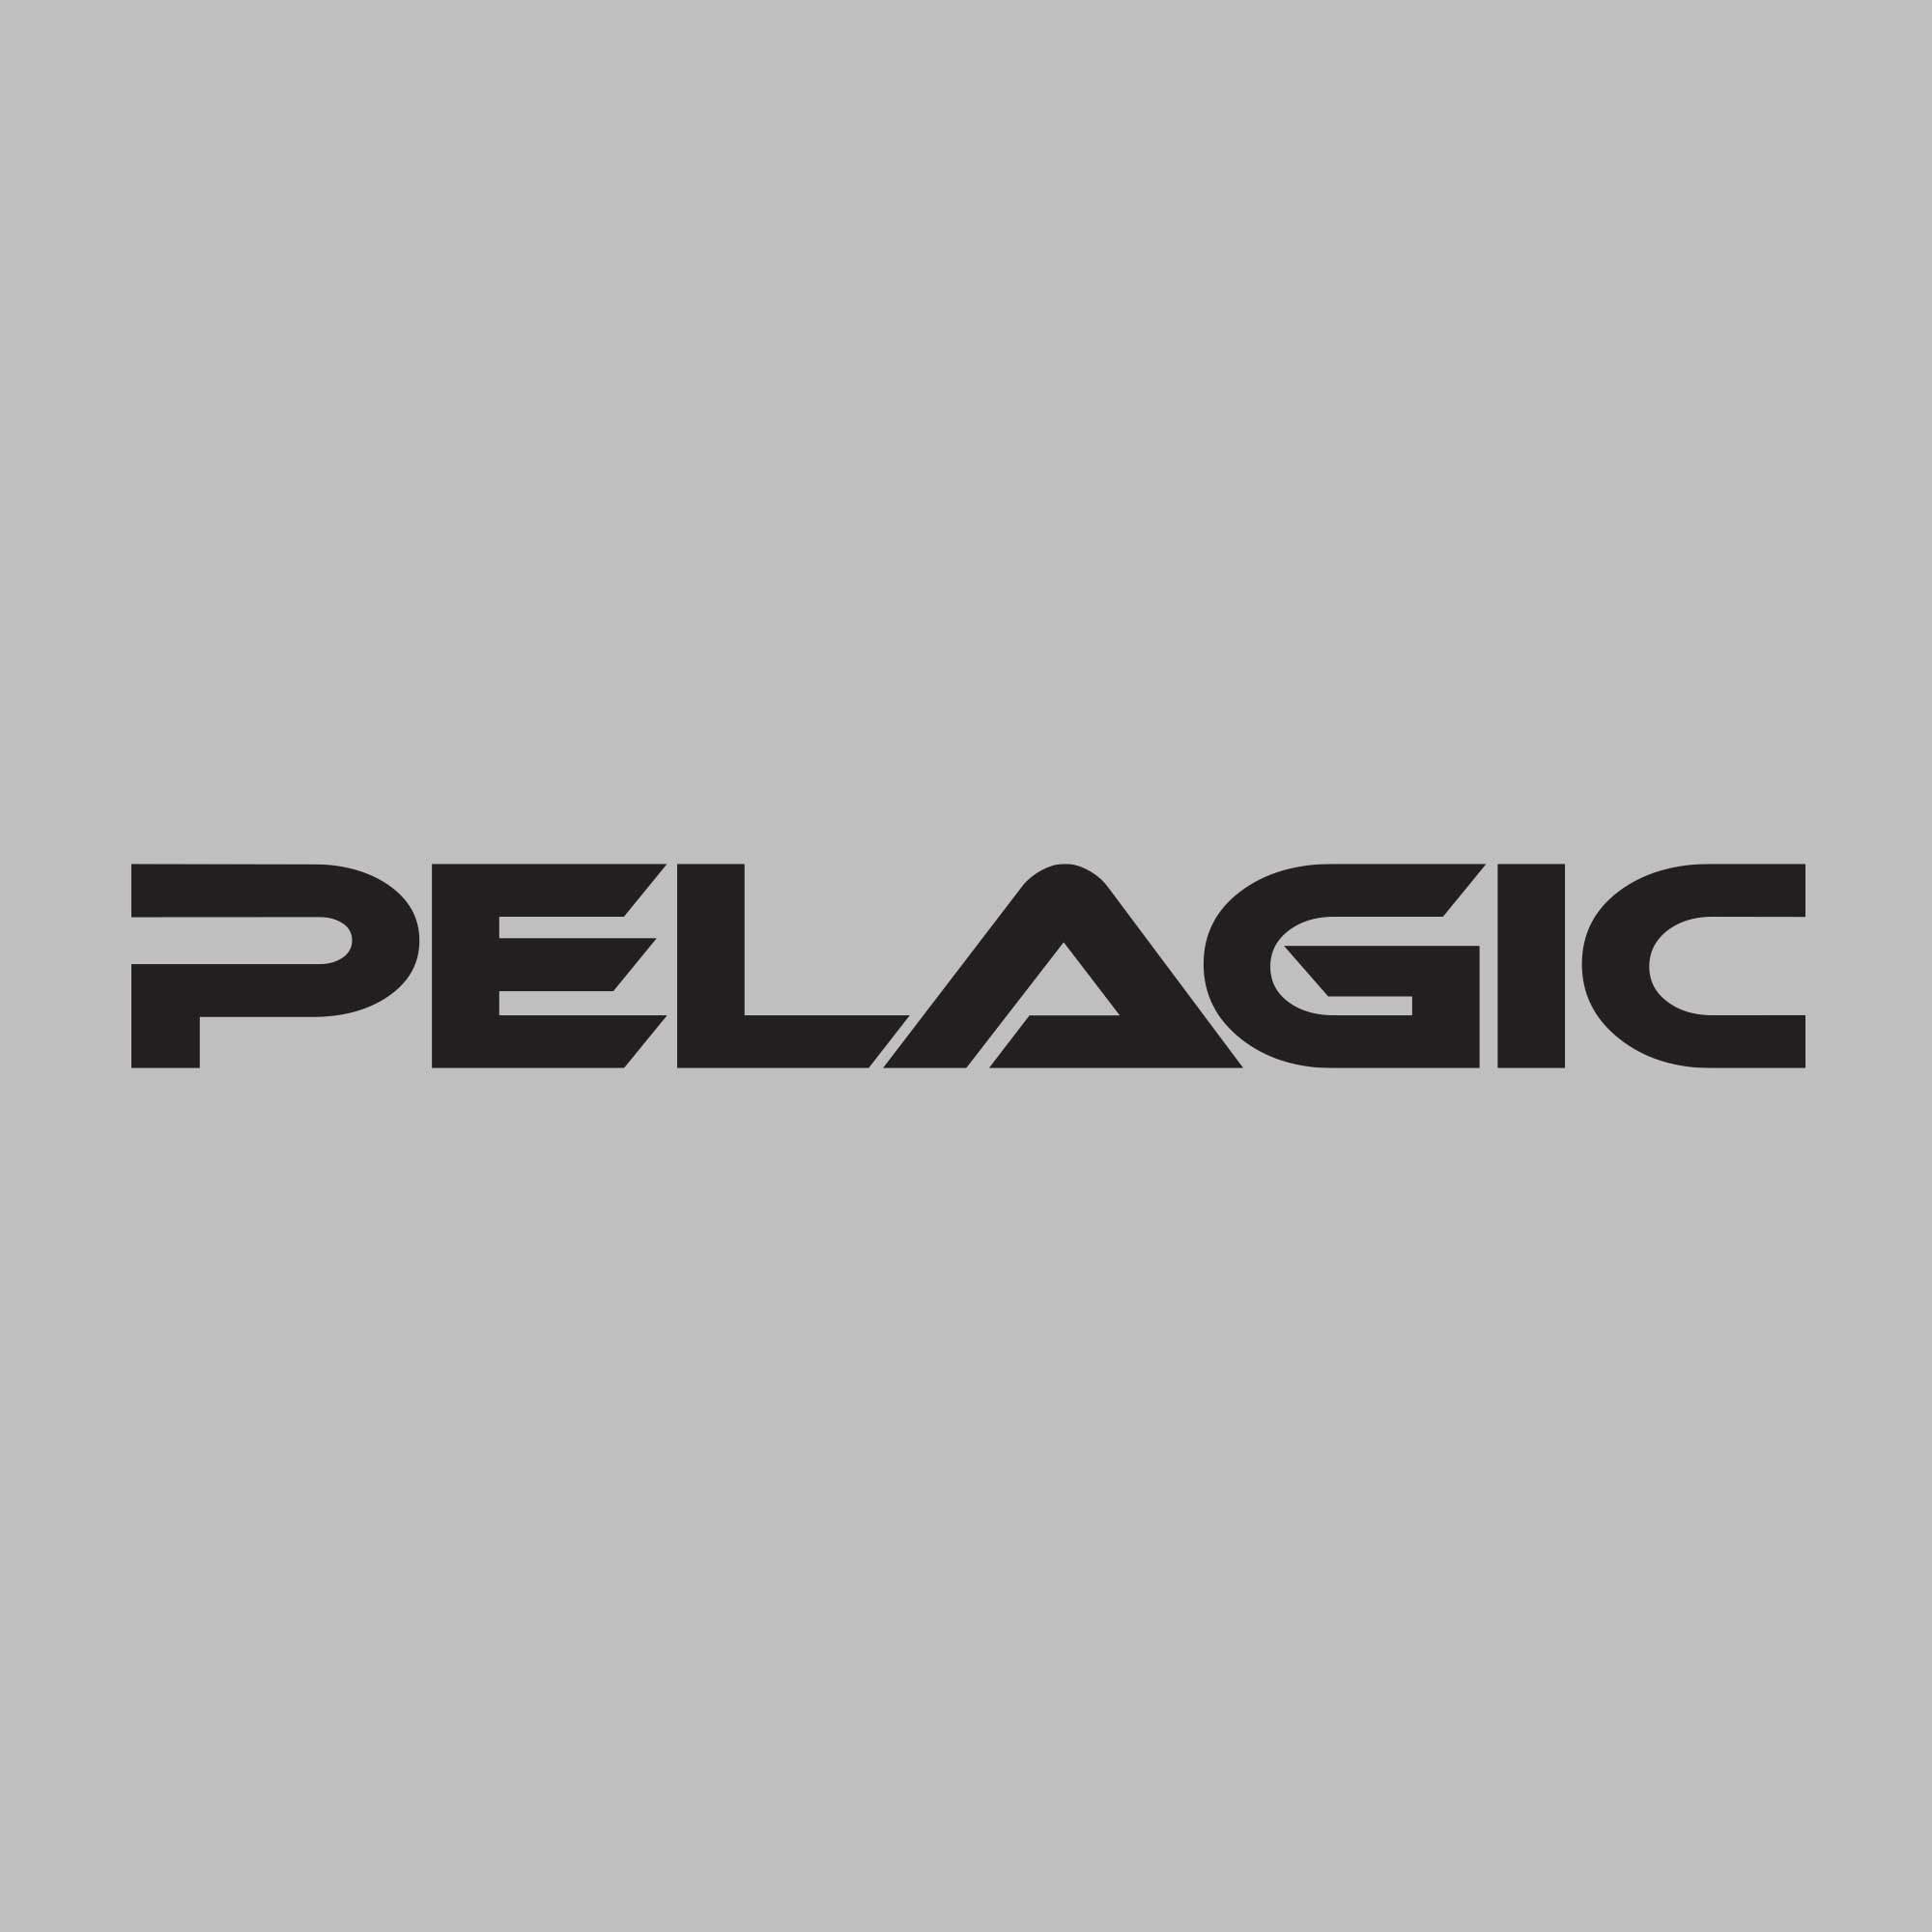 Pelagic Decal Large